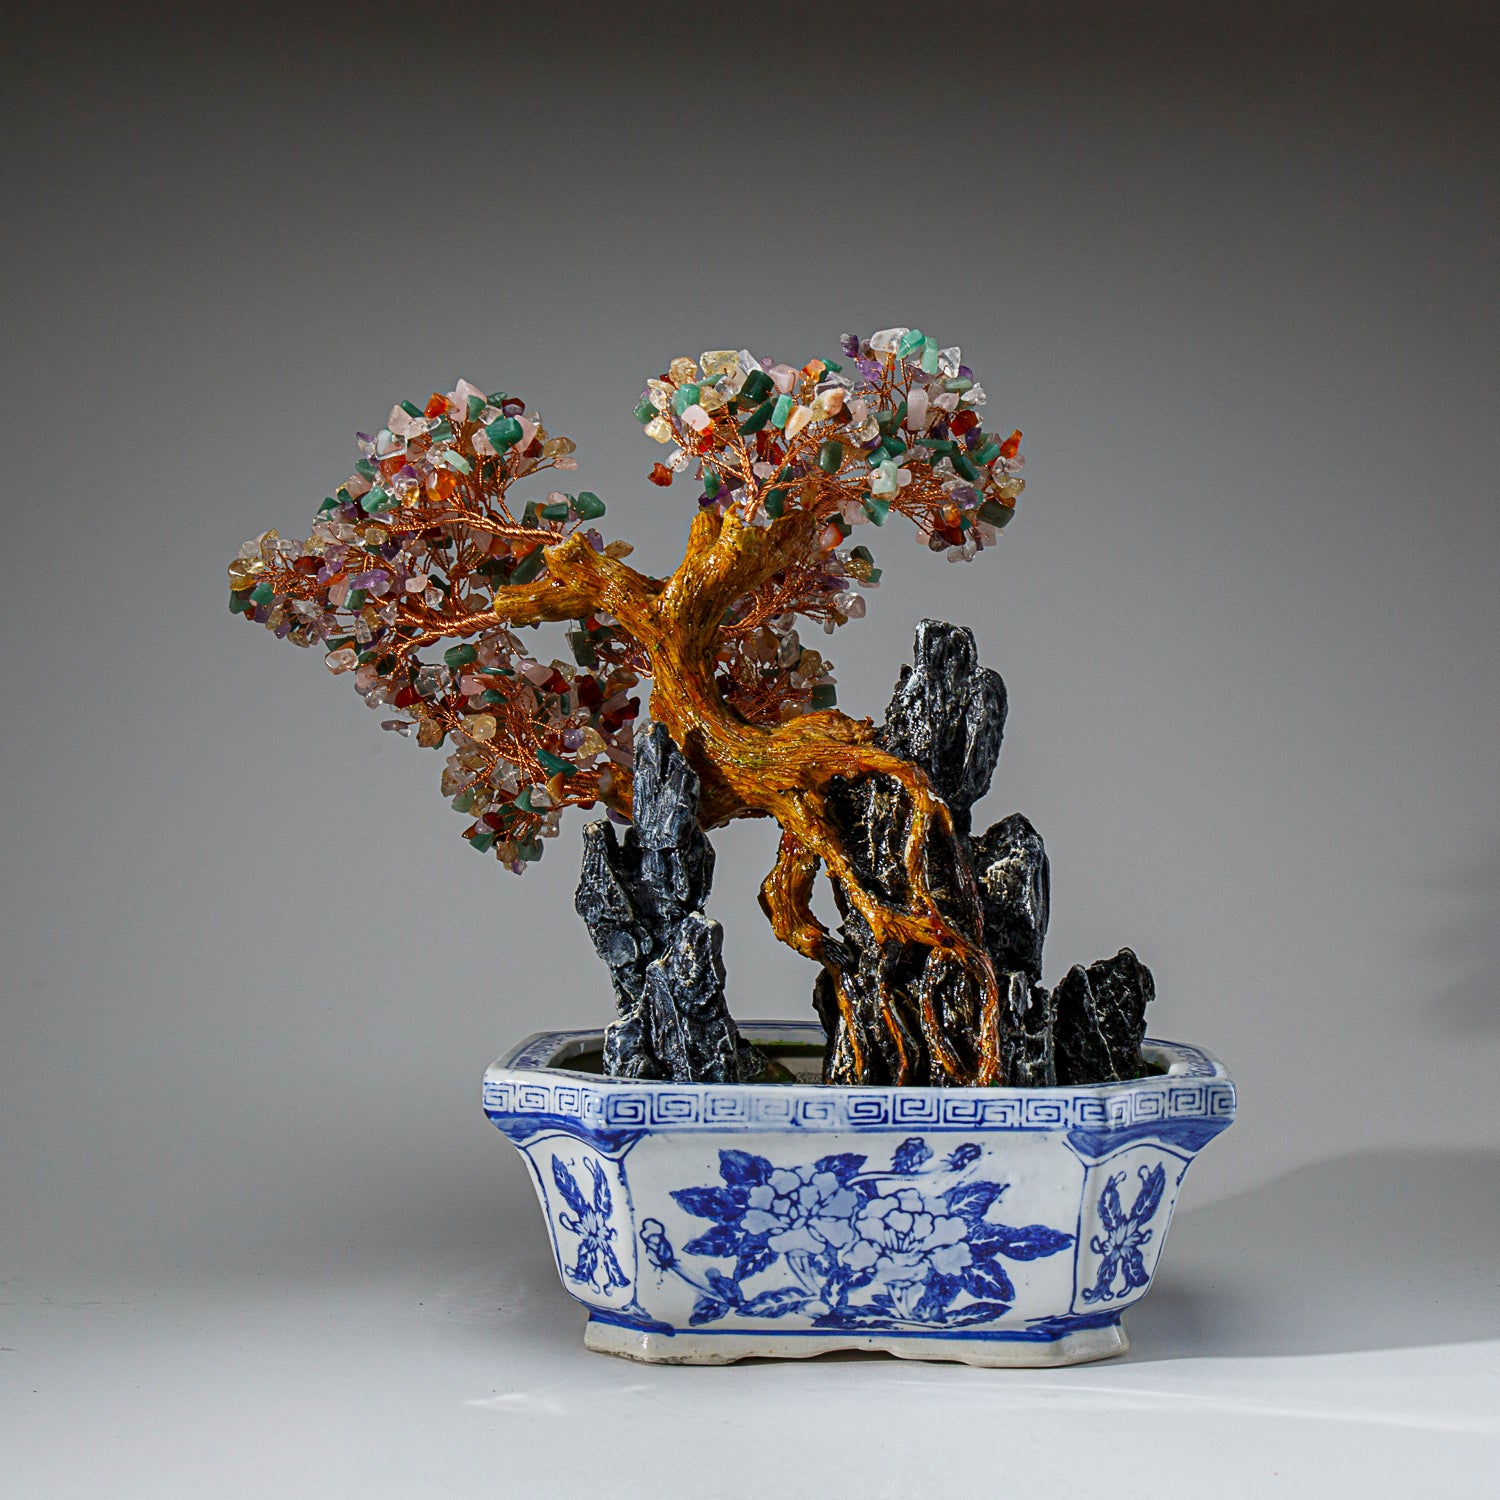 Genuine Multi Gemstone Bonsai Tree in Square Ceramic Pot (13” Tall)